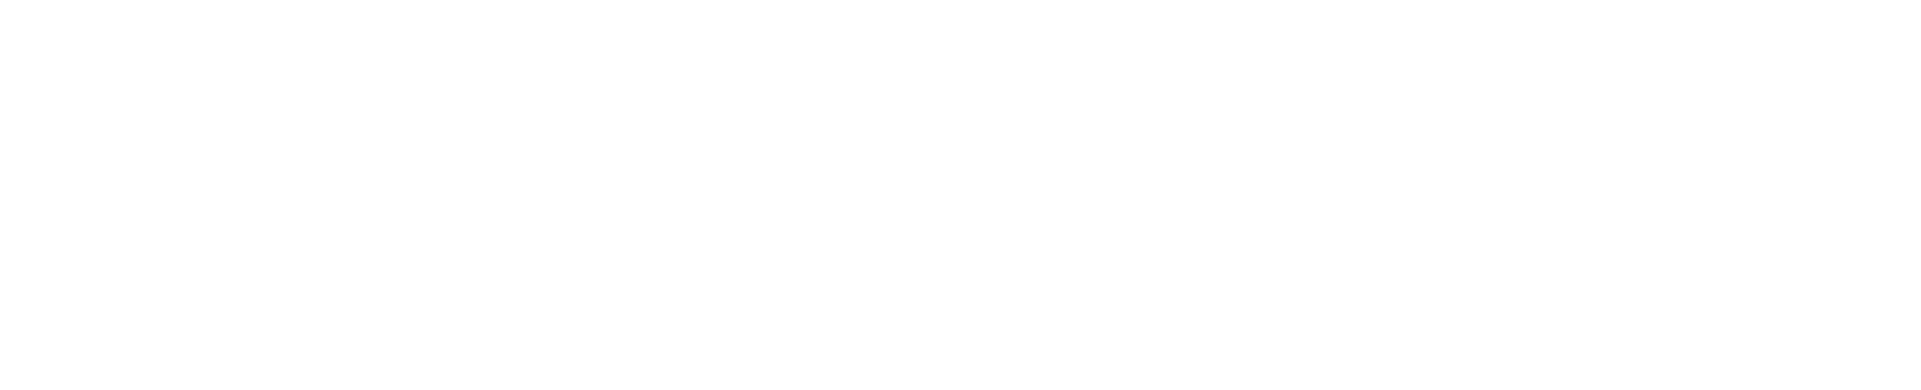 Cryptofisco logo